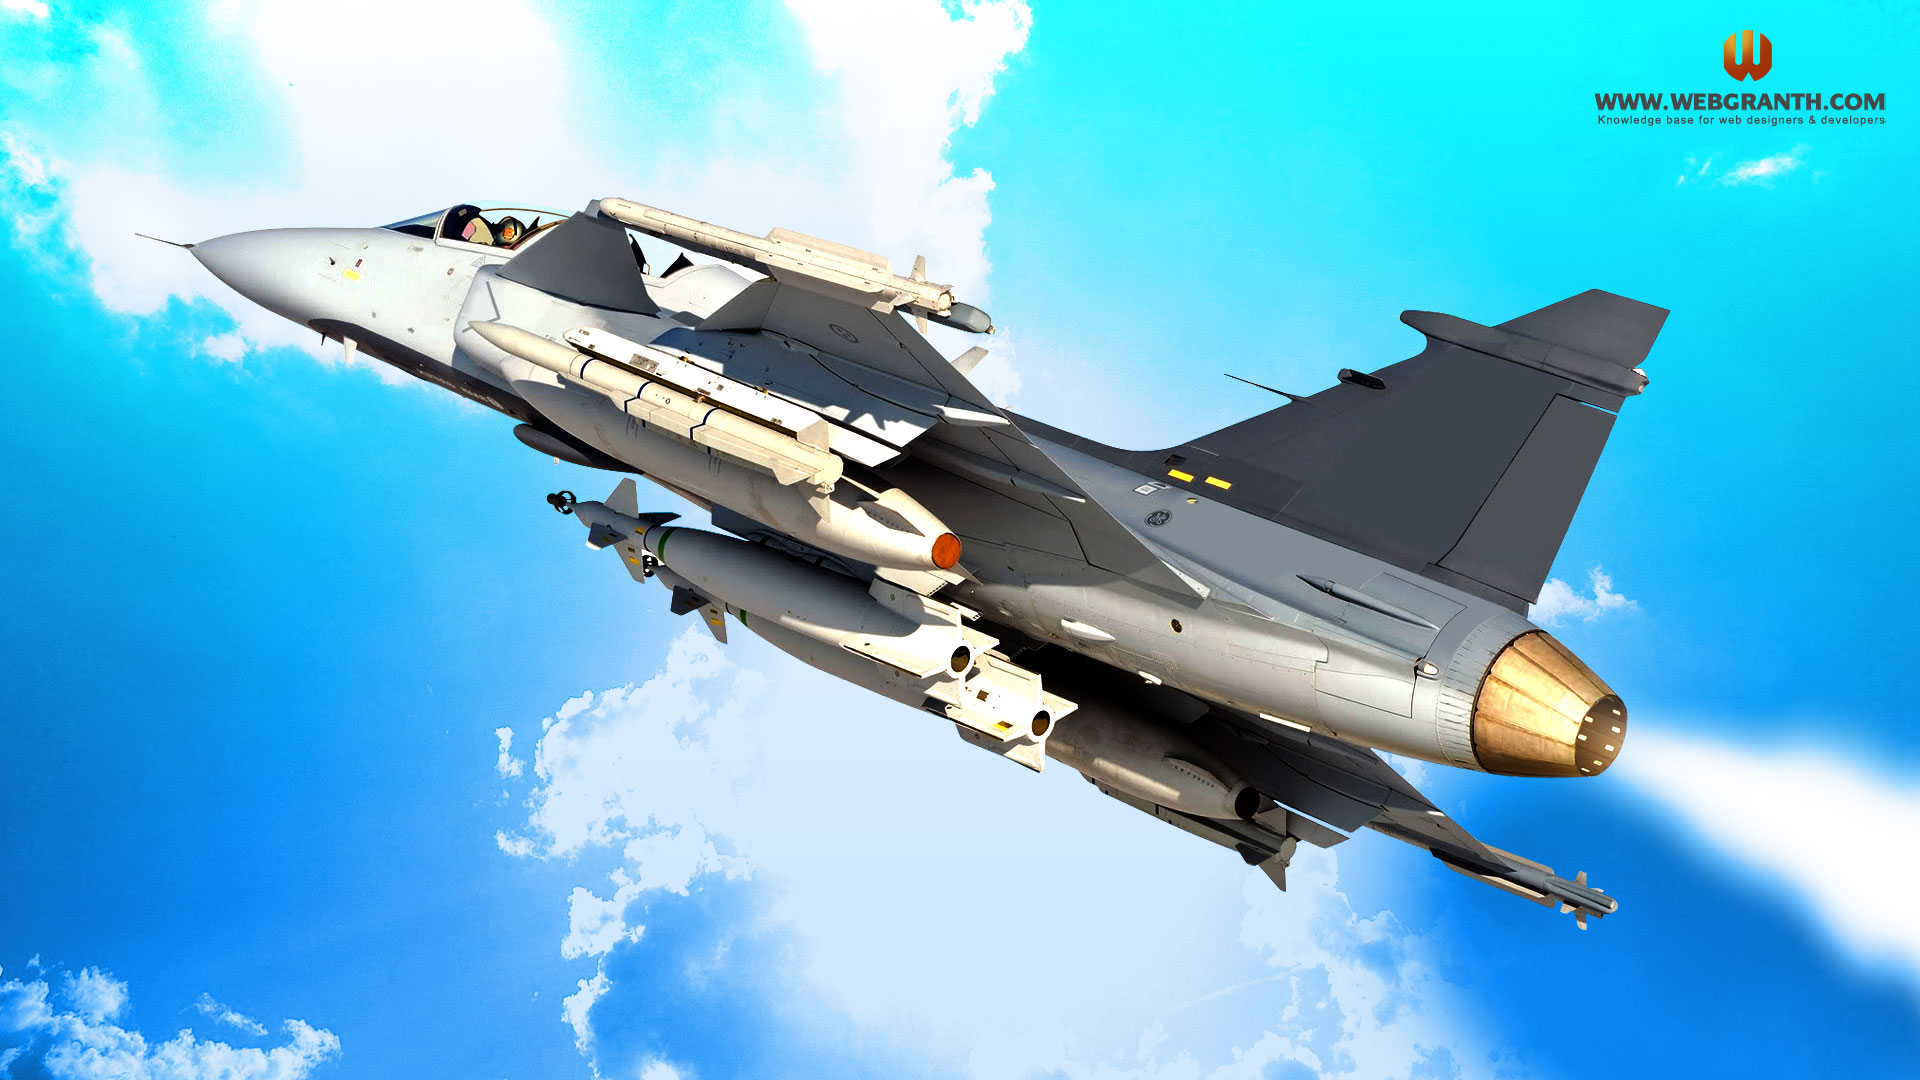 Fighter Jet HD Desktop Wallpaper   Webgranth 2015 1920x1080